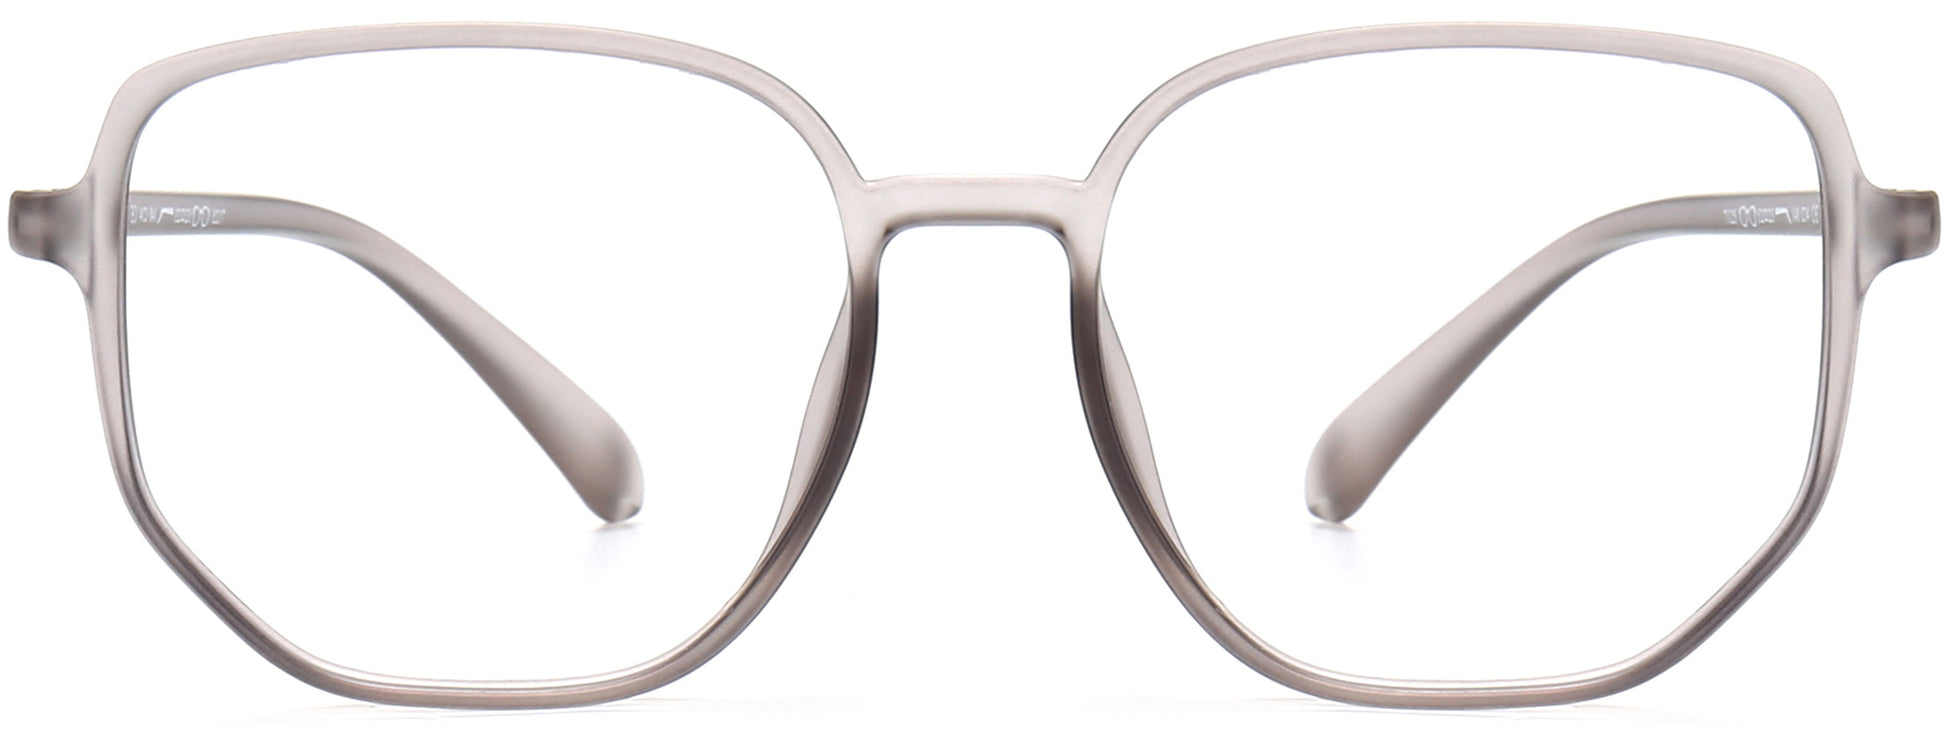 Priscilla Geometric Gray Eyeglasses from ANRRI, front view